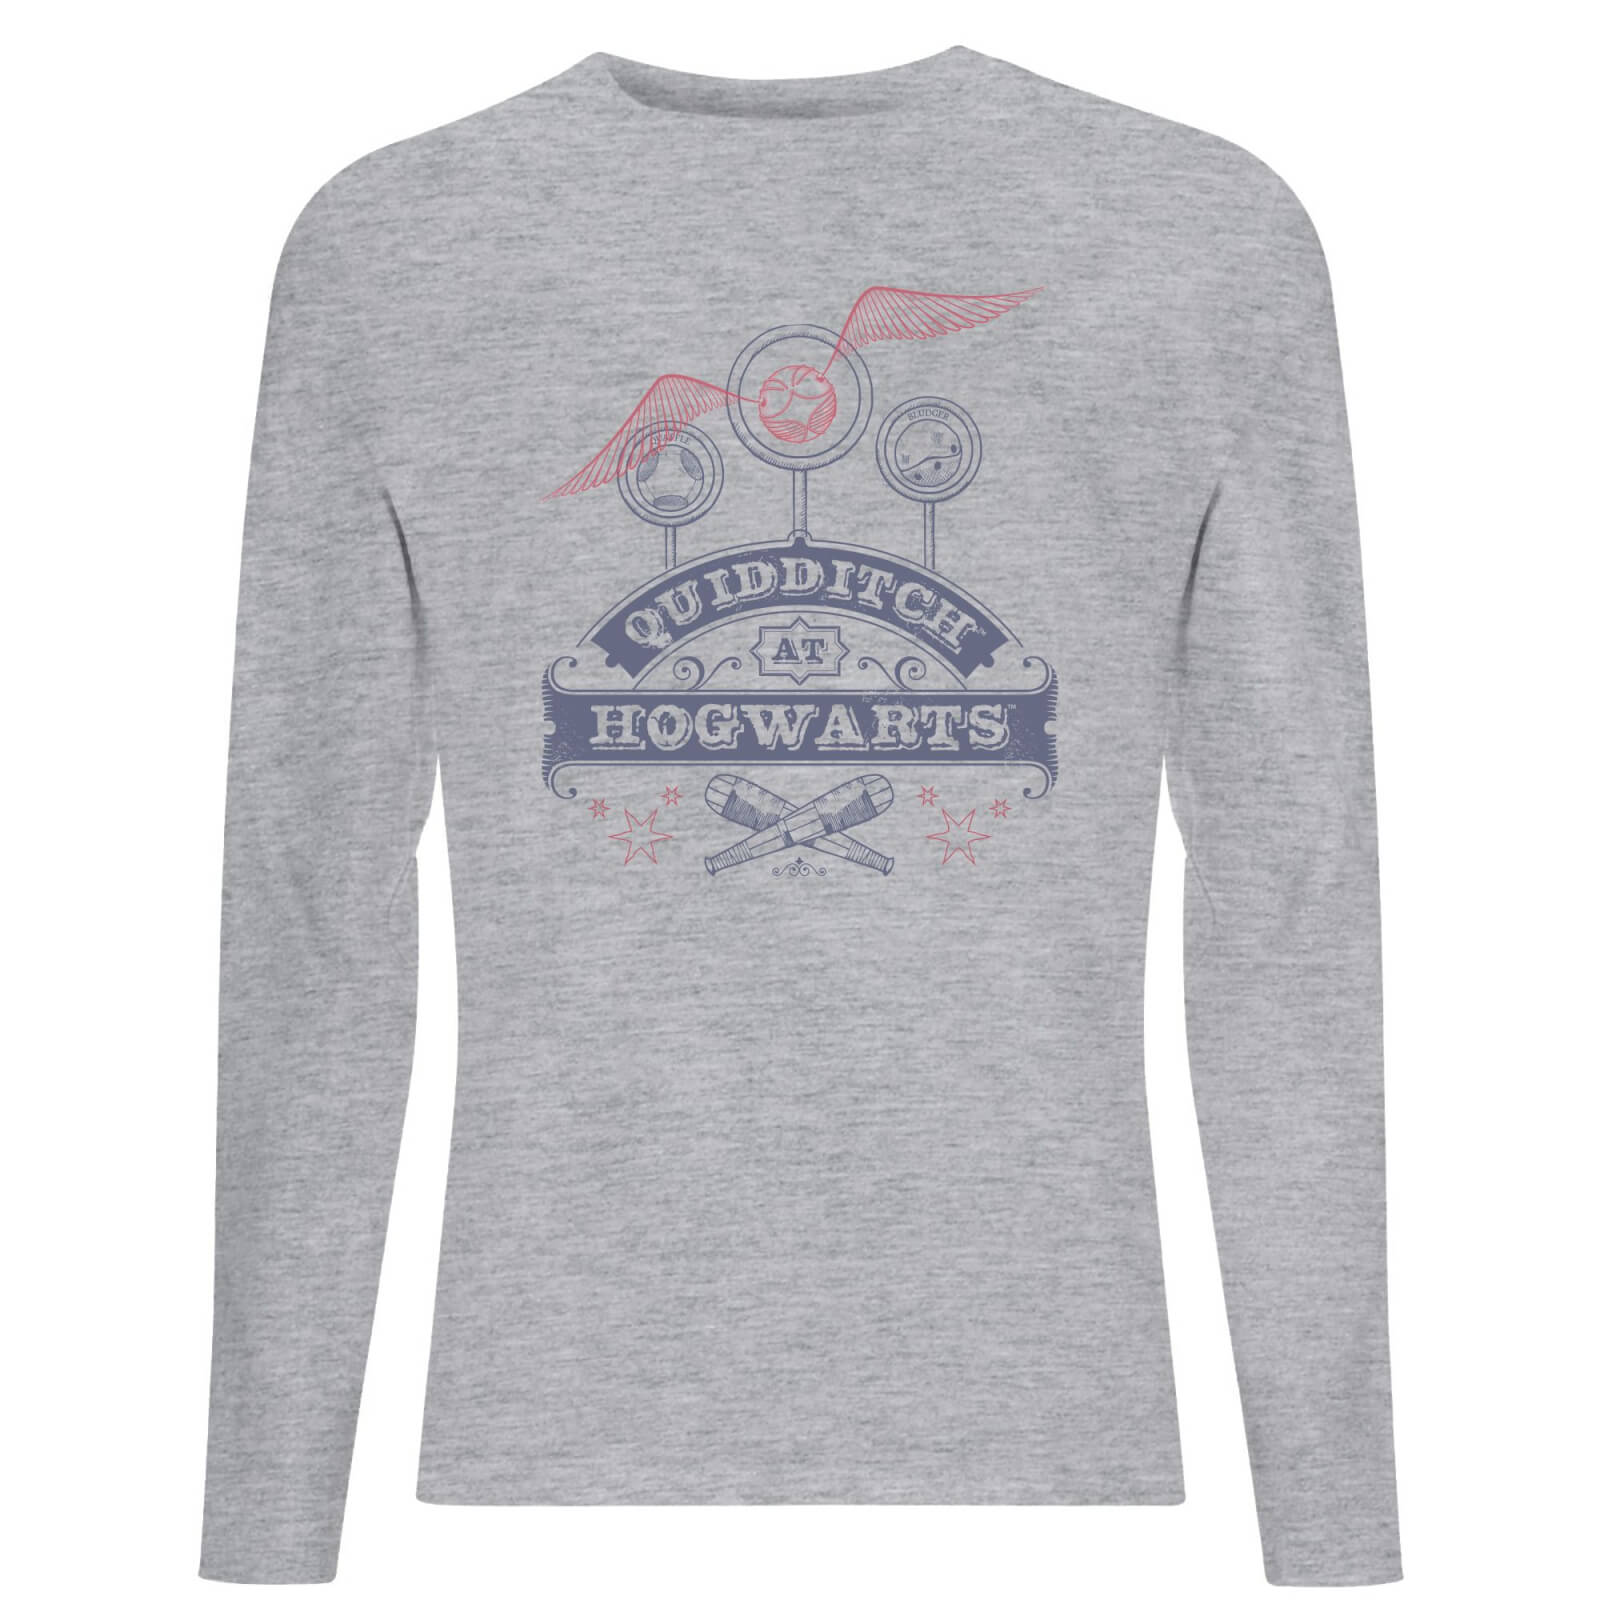 Harry Potter Quidditch At Hogwarts Men's Long Sleeve T-Shirt - Grey - S - Grey